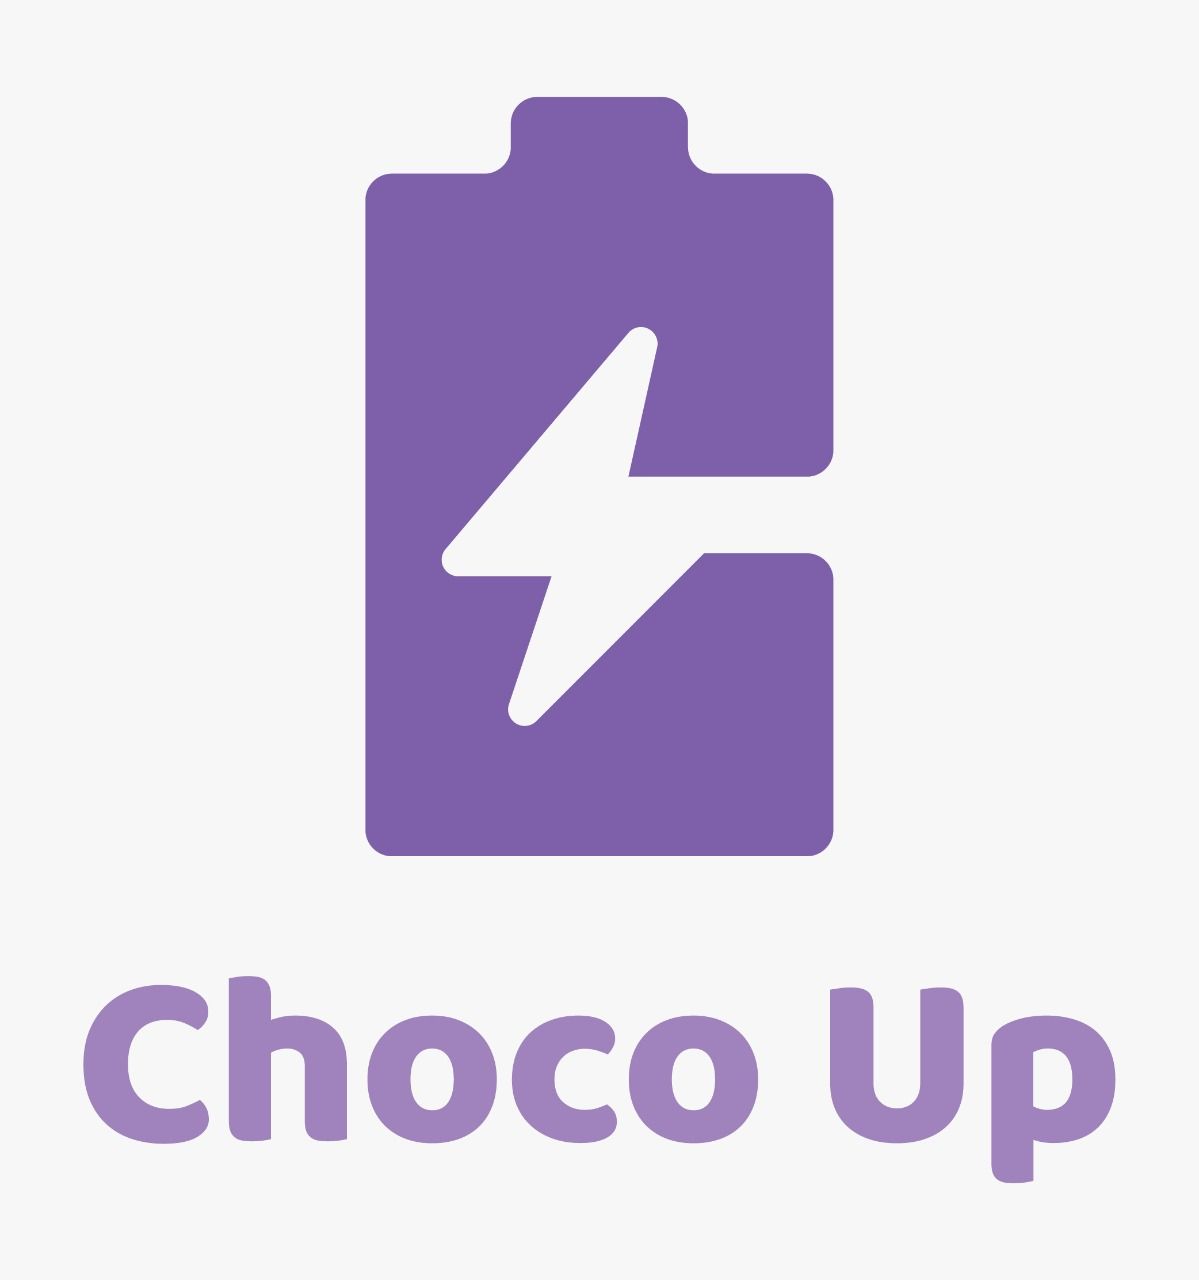 Choco Up